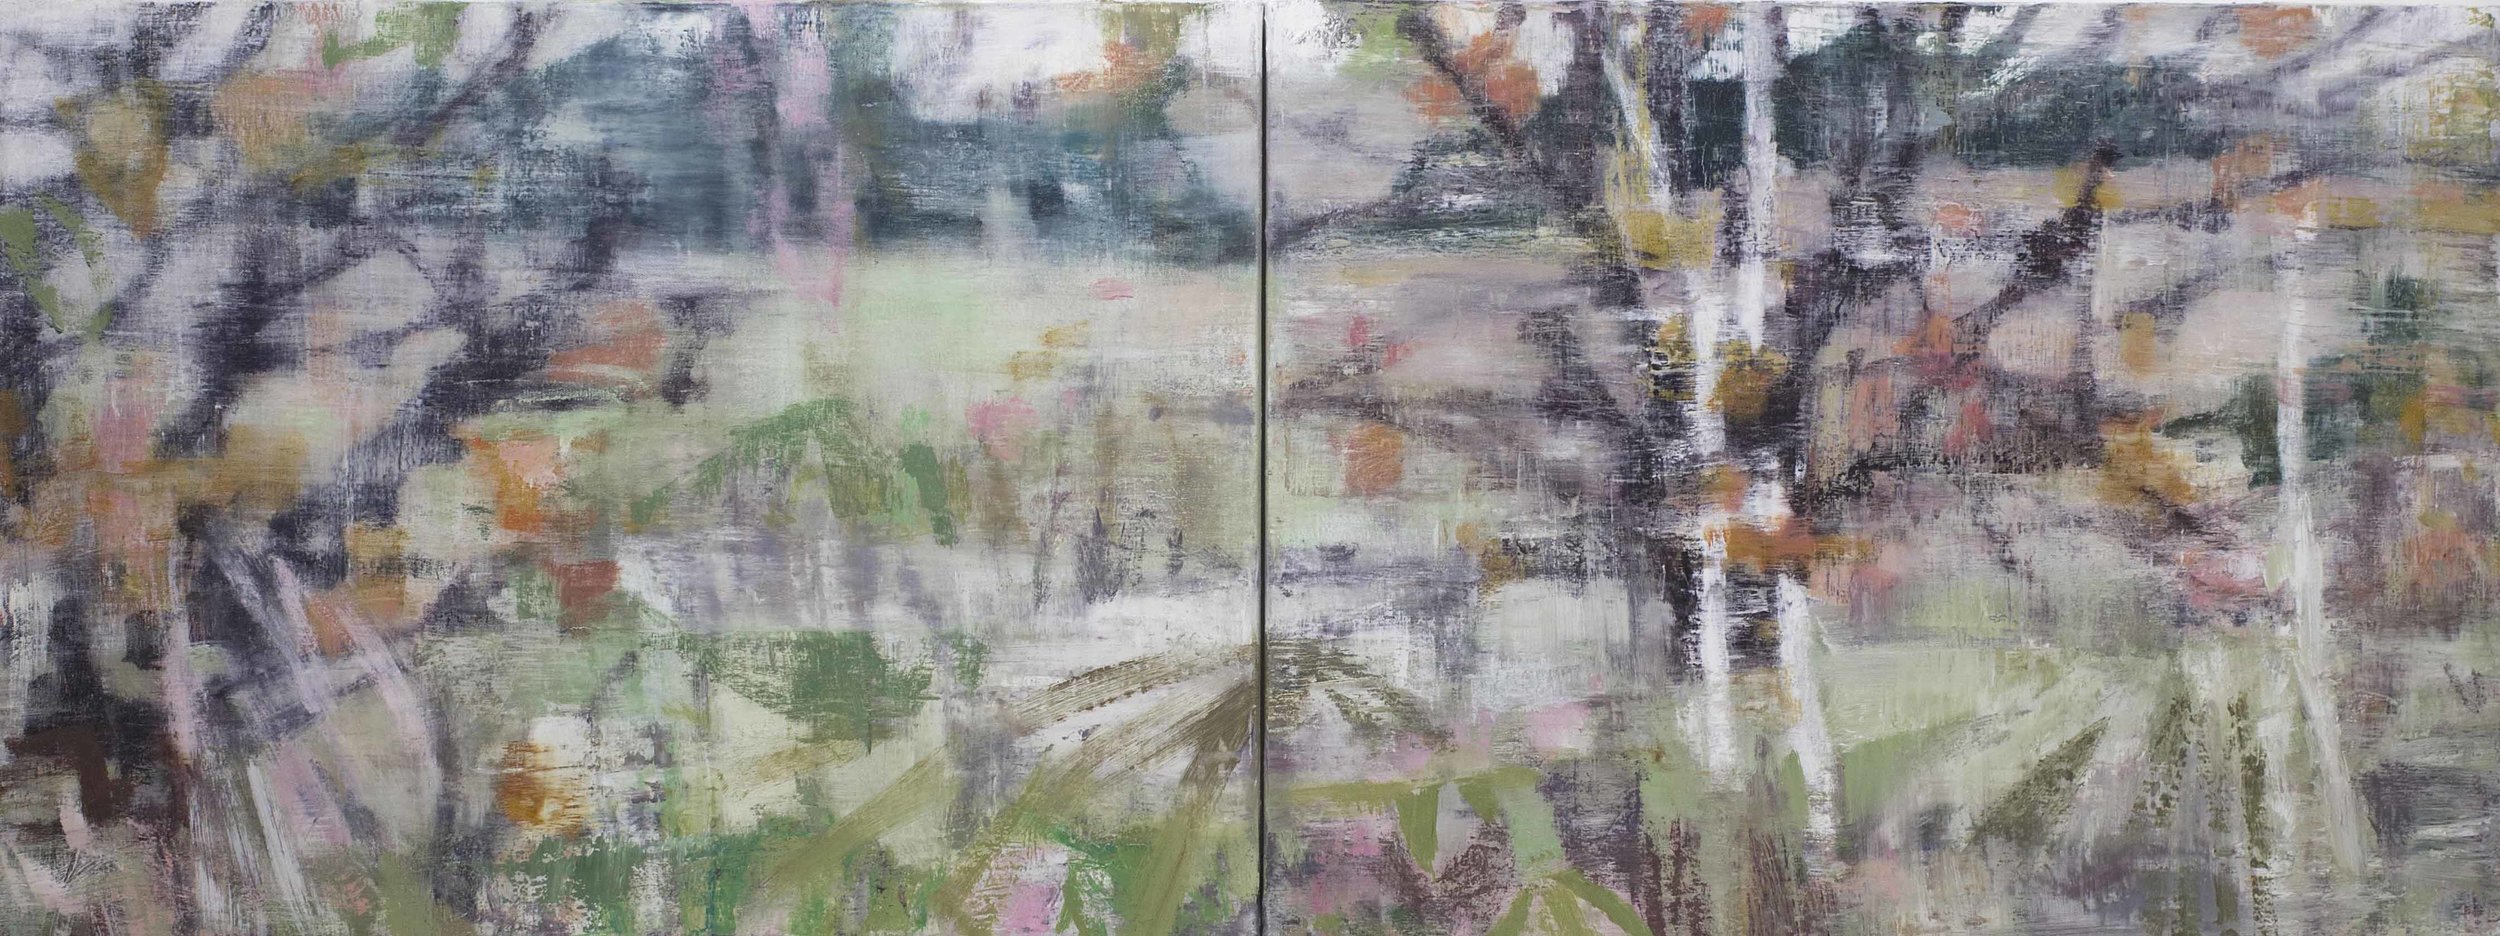  Joanna Logue,&nbsp; Willow - Ducknest Paddock, 2016 , oil on inen, 60 x 160cm 